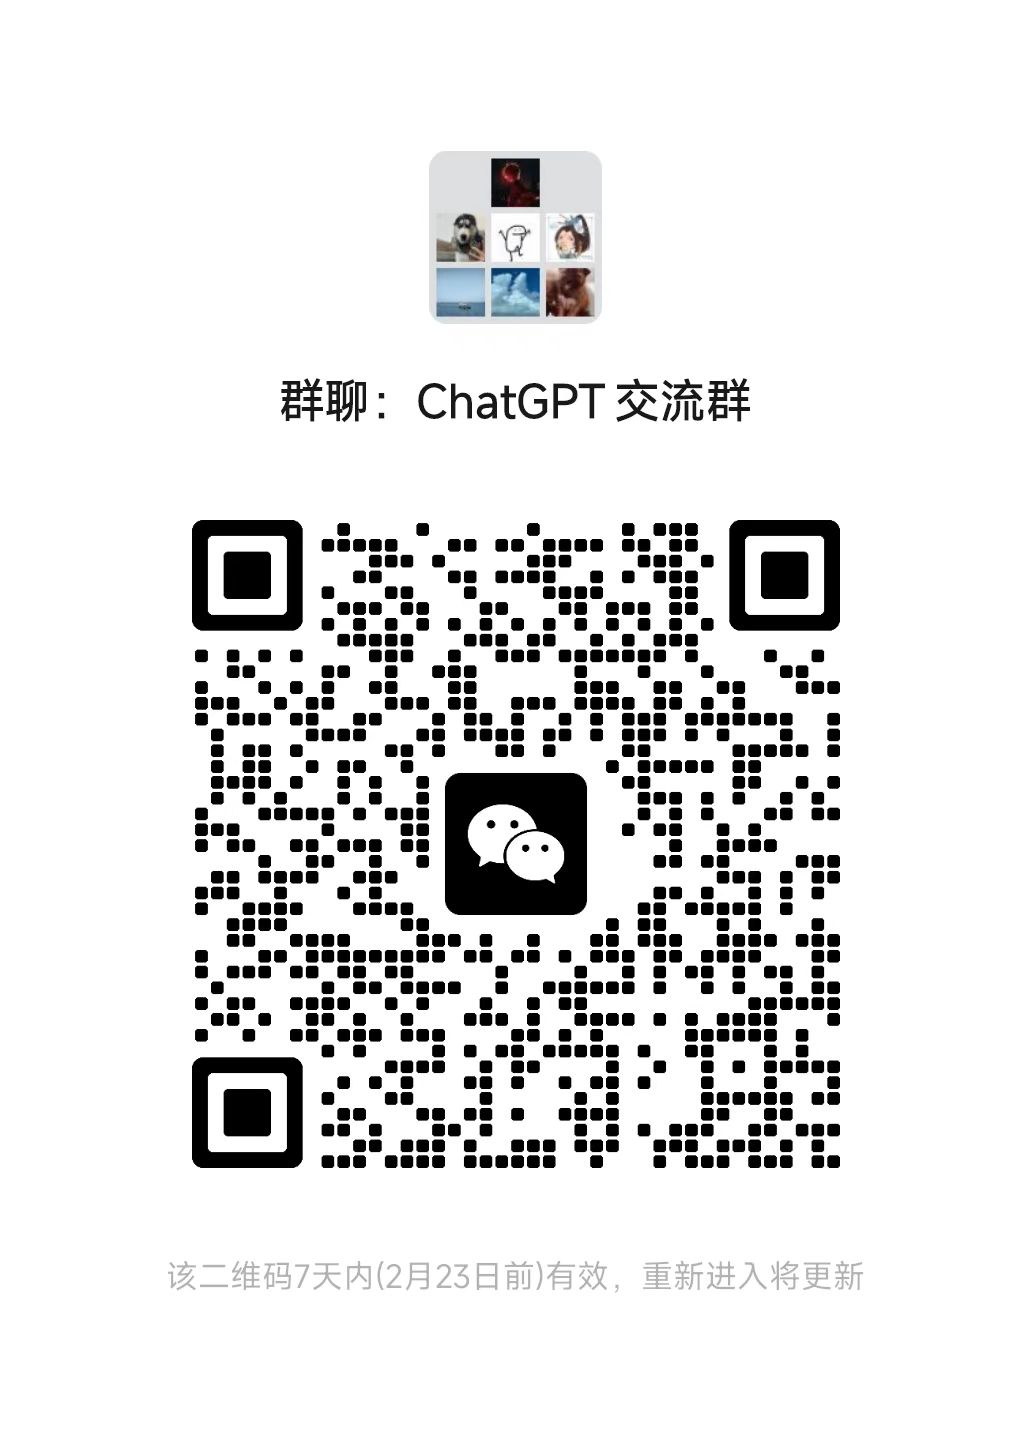 ChatGPT交流群 群微信二维码